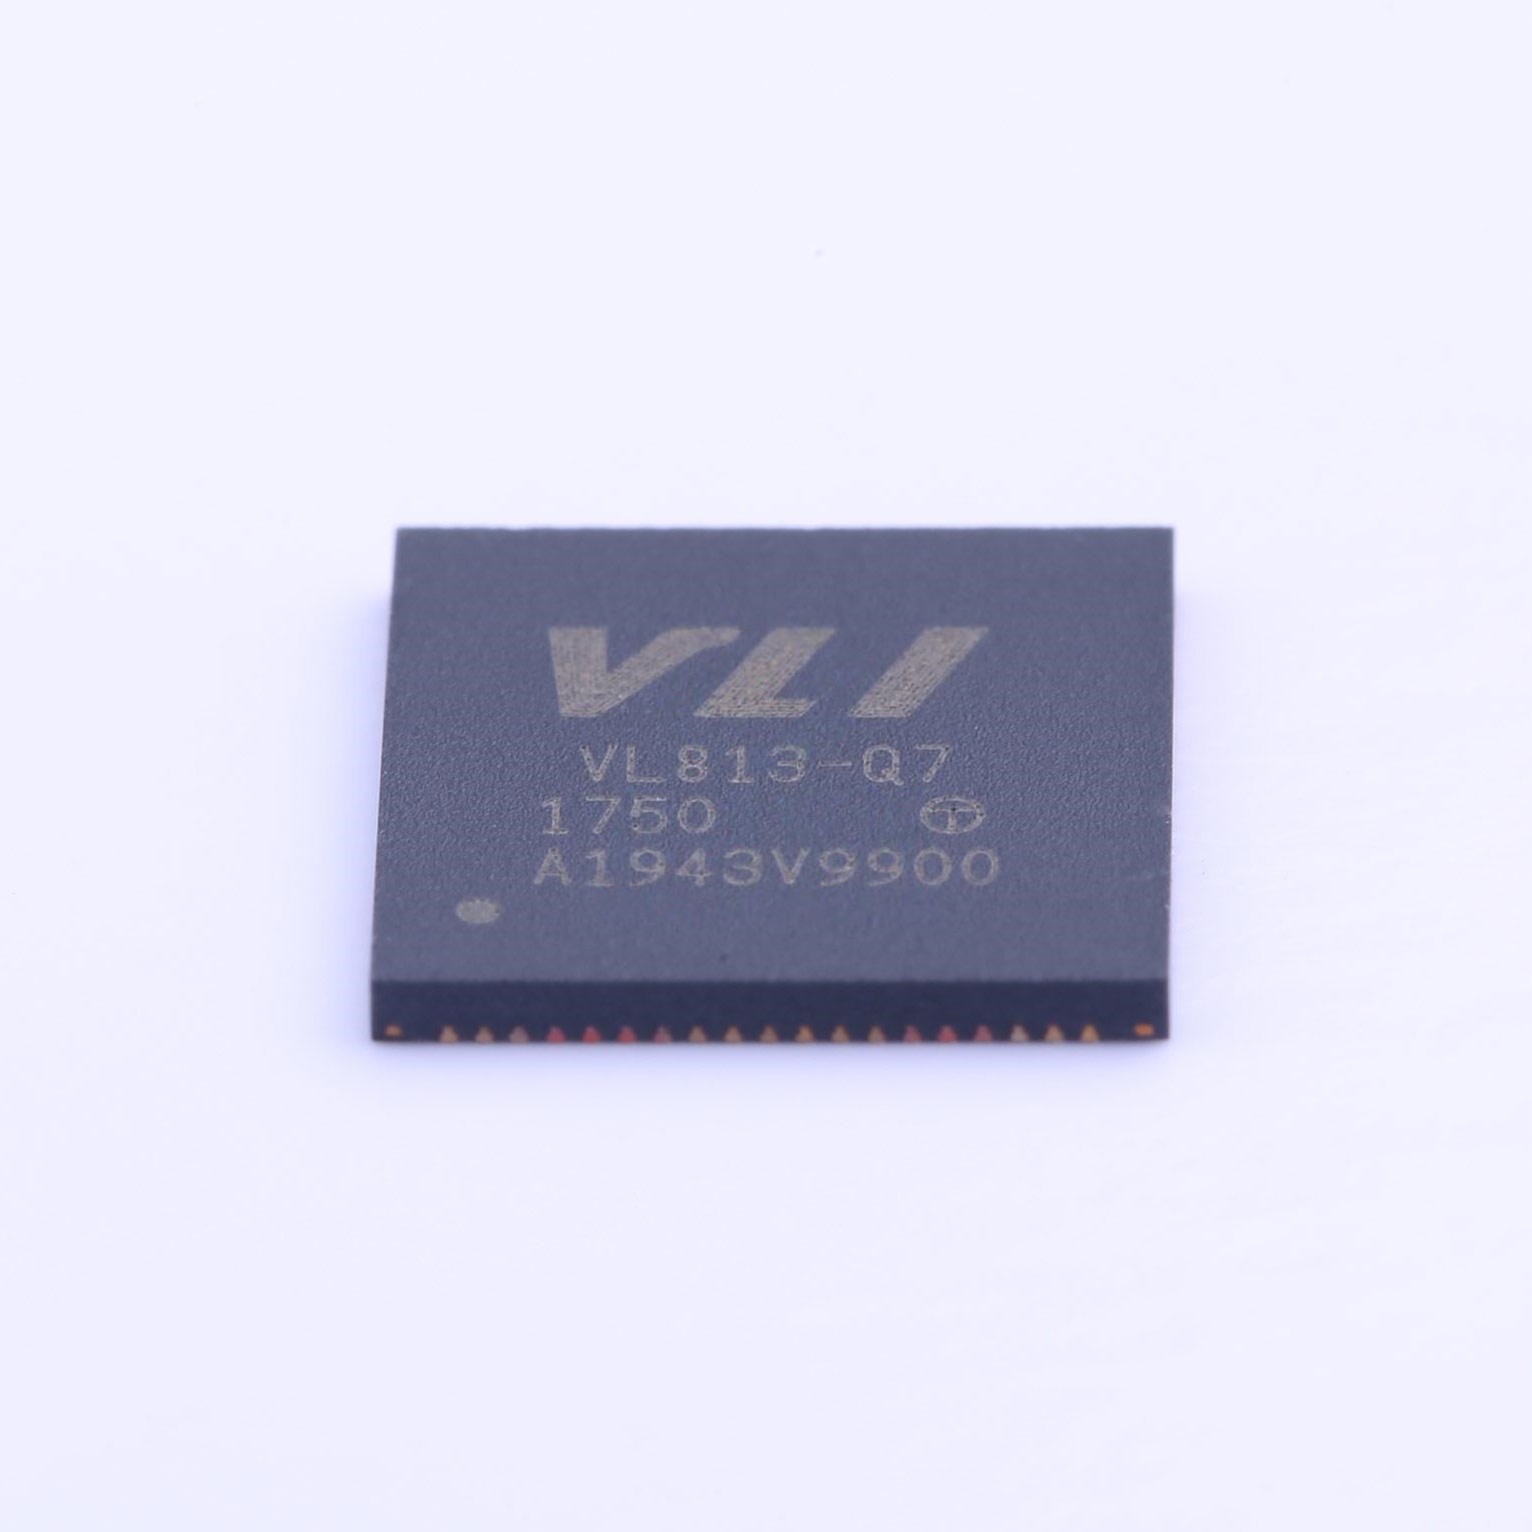 VIA(台湾威盛电子) VL813(A1)